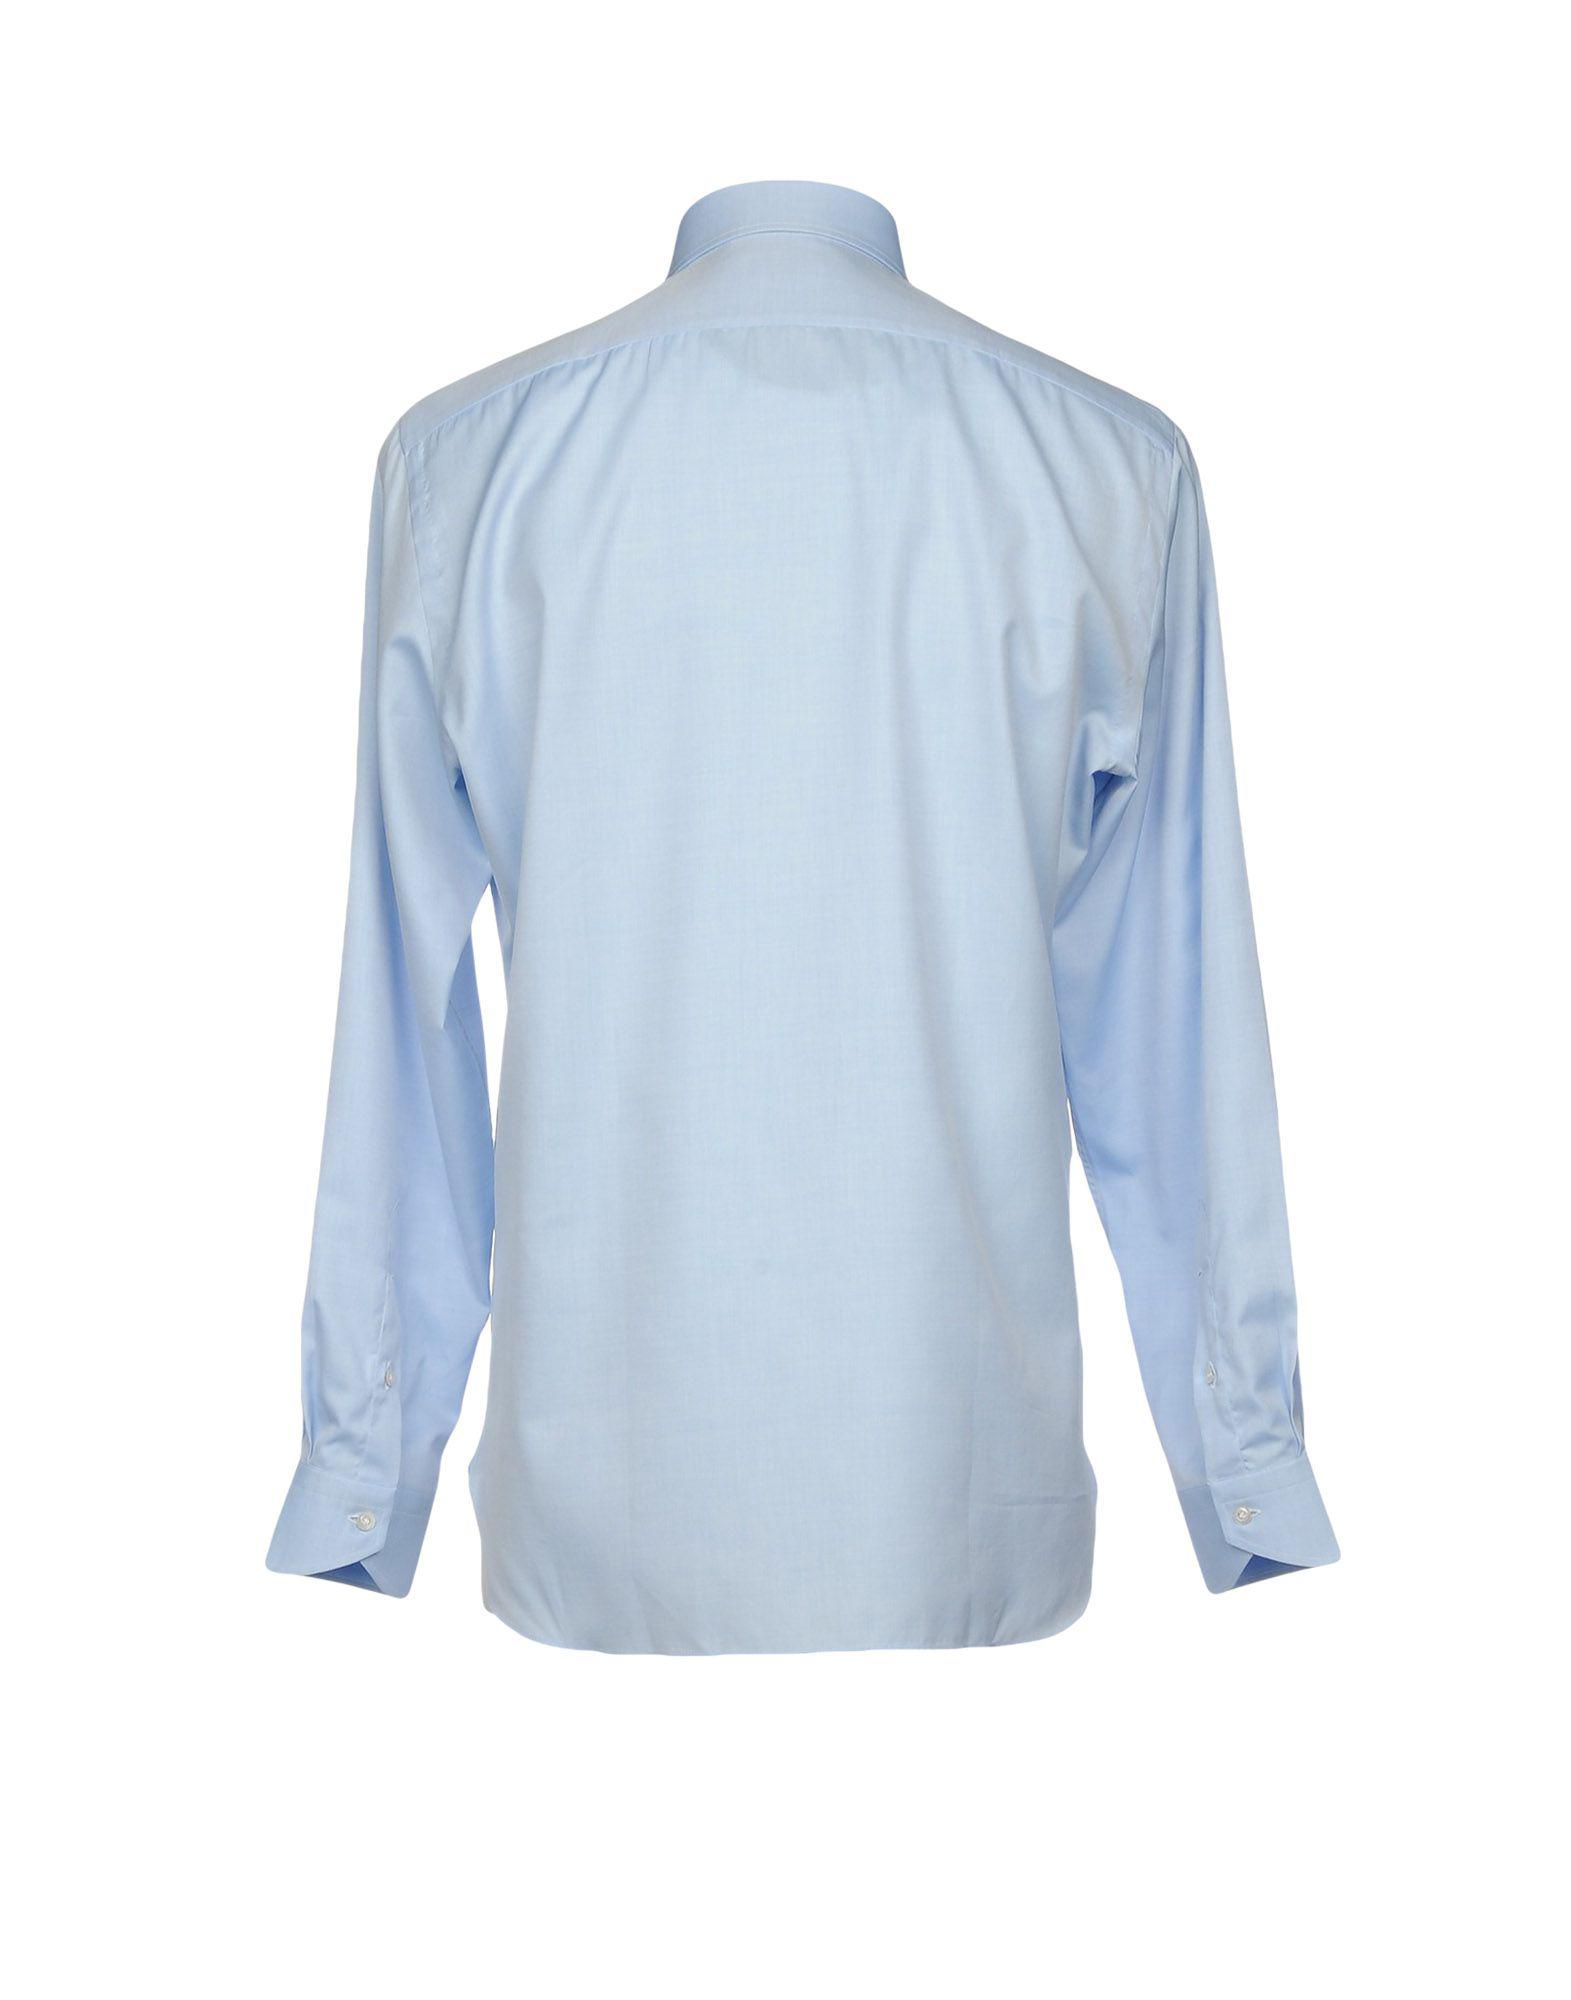 Vincenzo Di Ruggiero Cotton Shirt in Sky Blue (Blue) for Men - Lyst